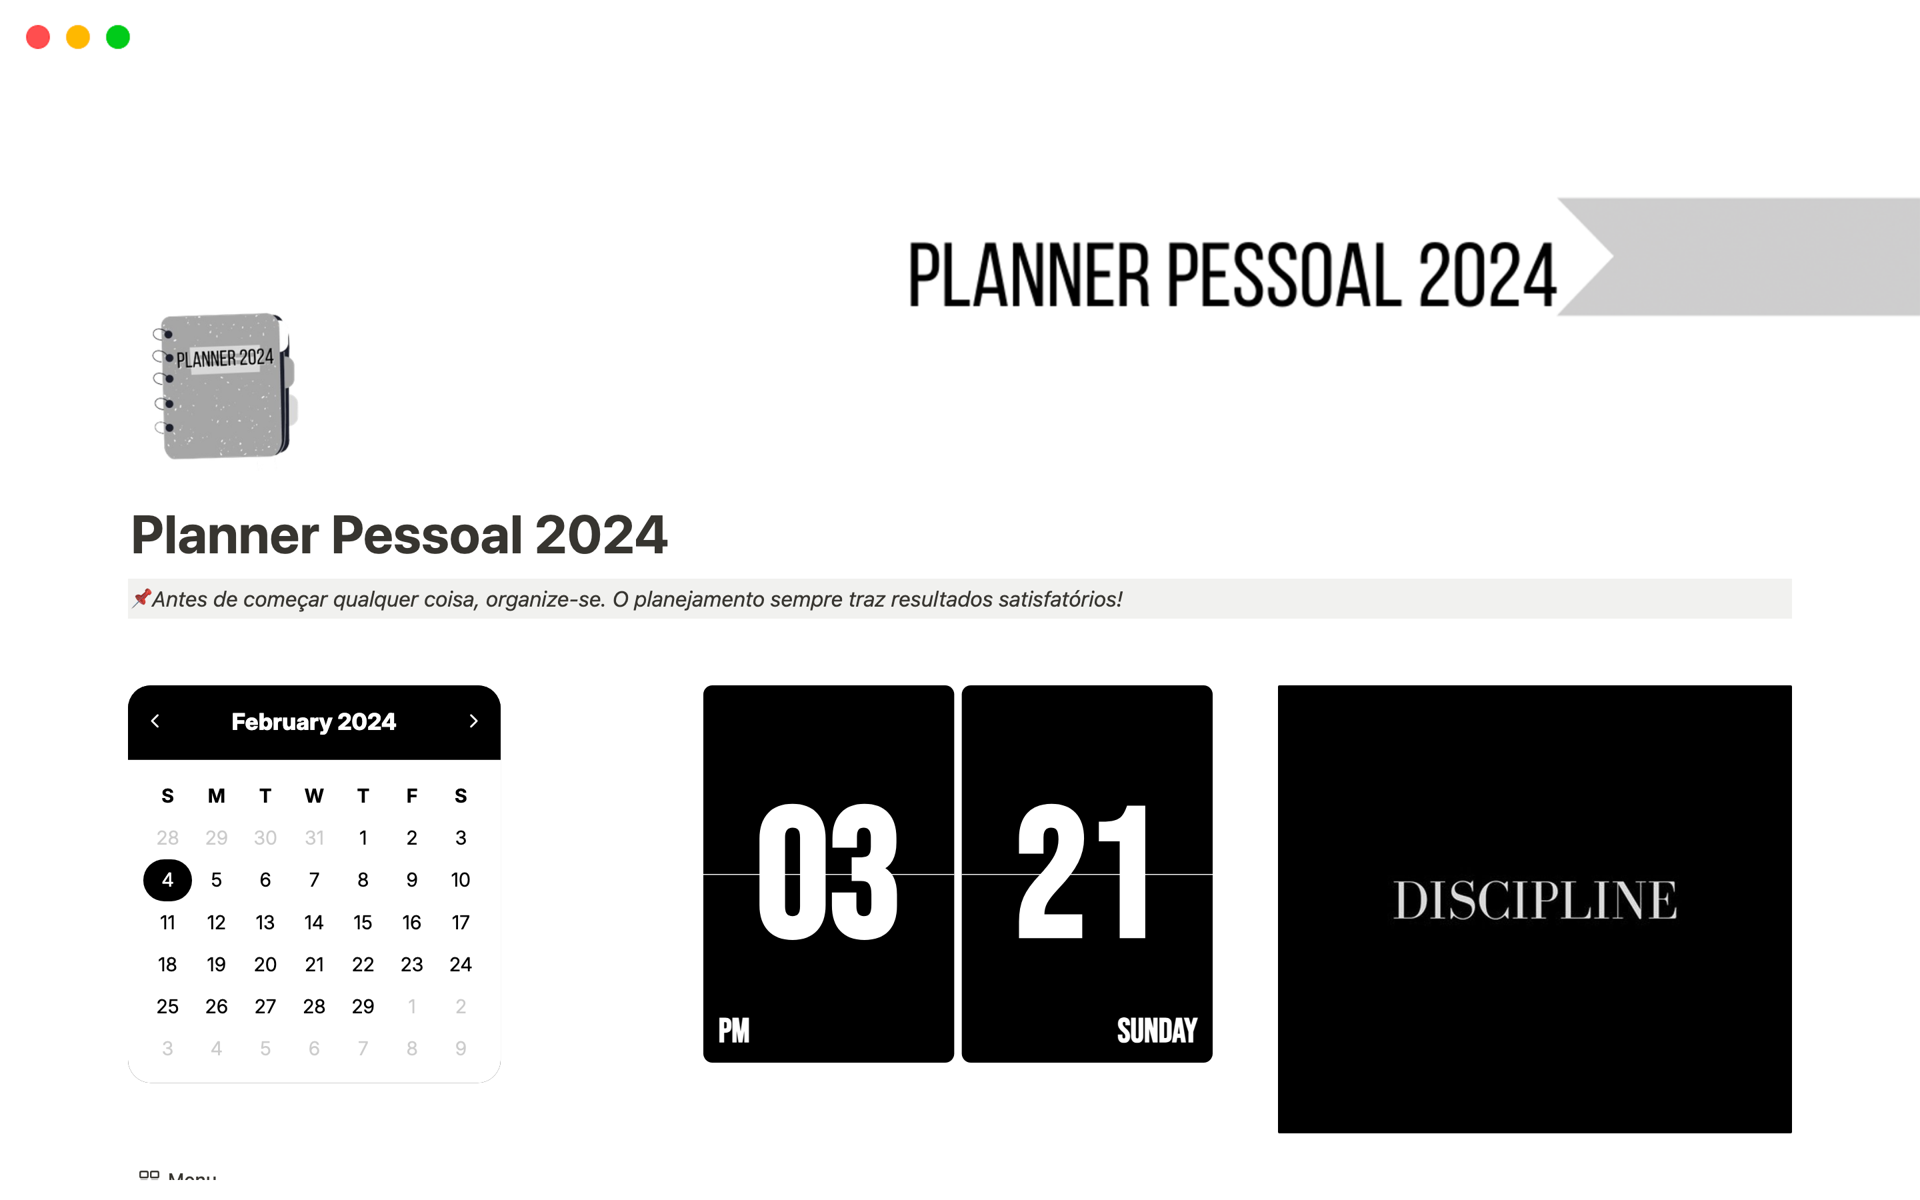 Vista previa de una plantilla para Planner Pessoal 2024